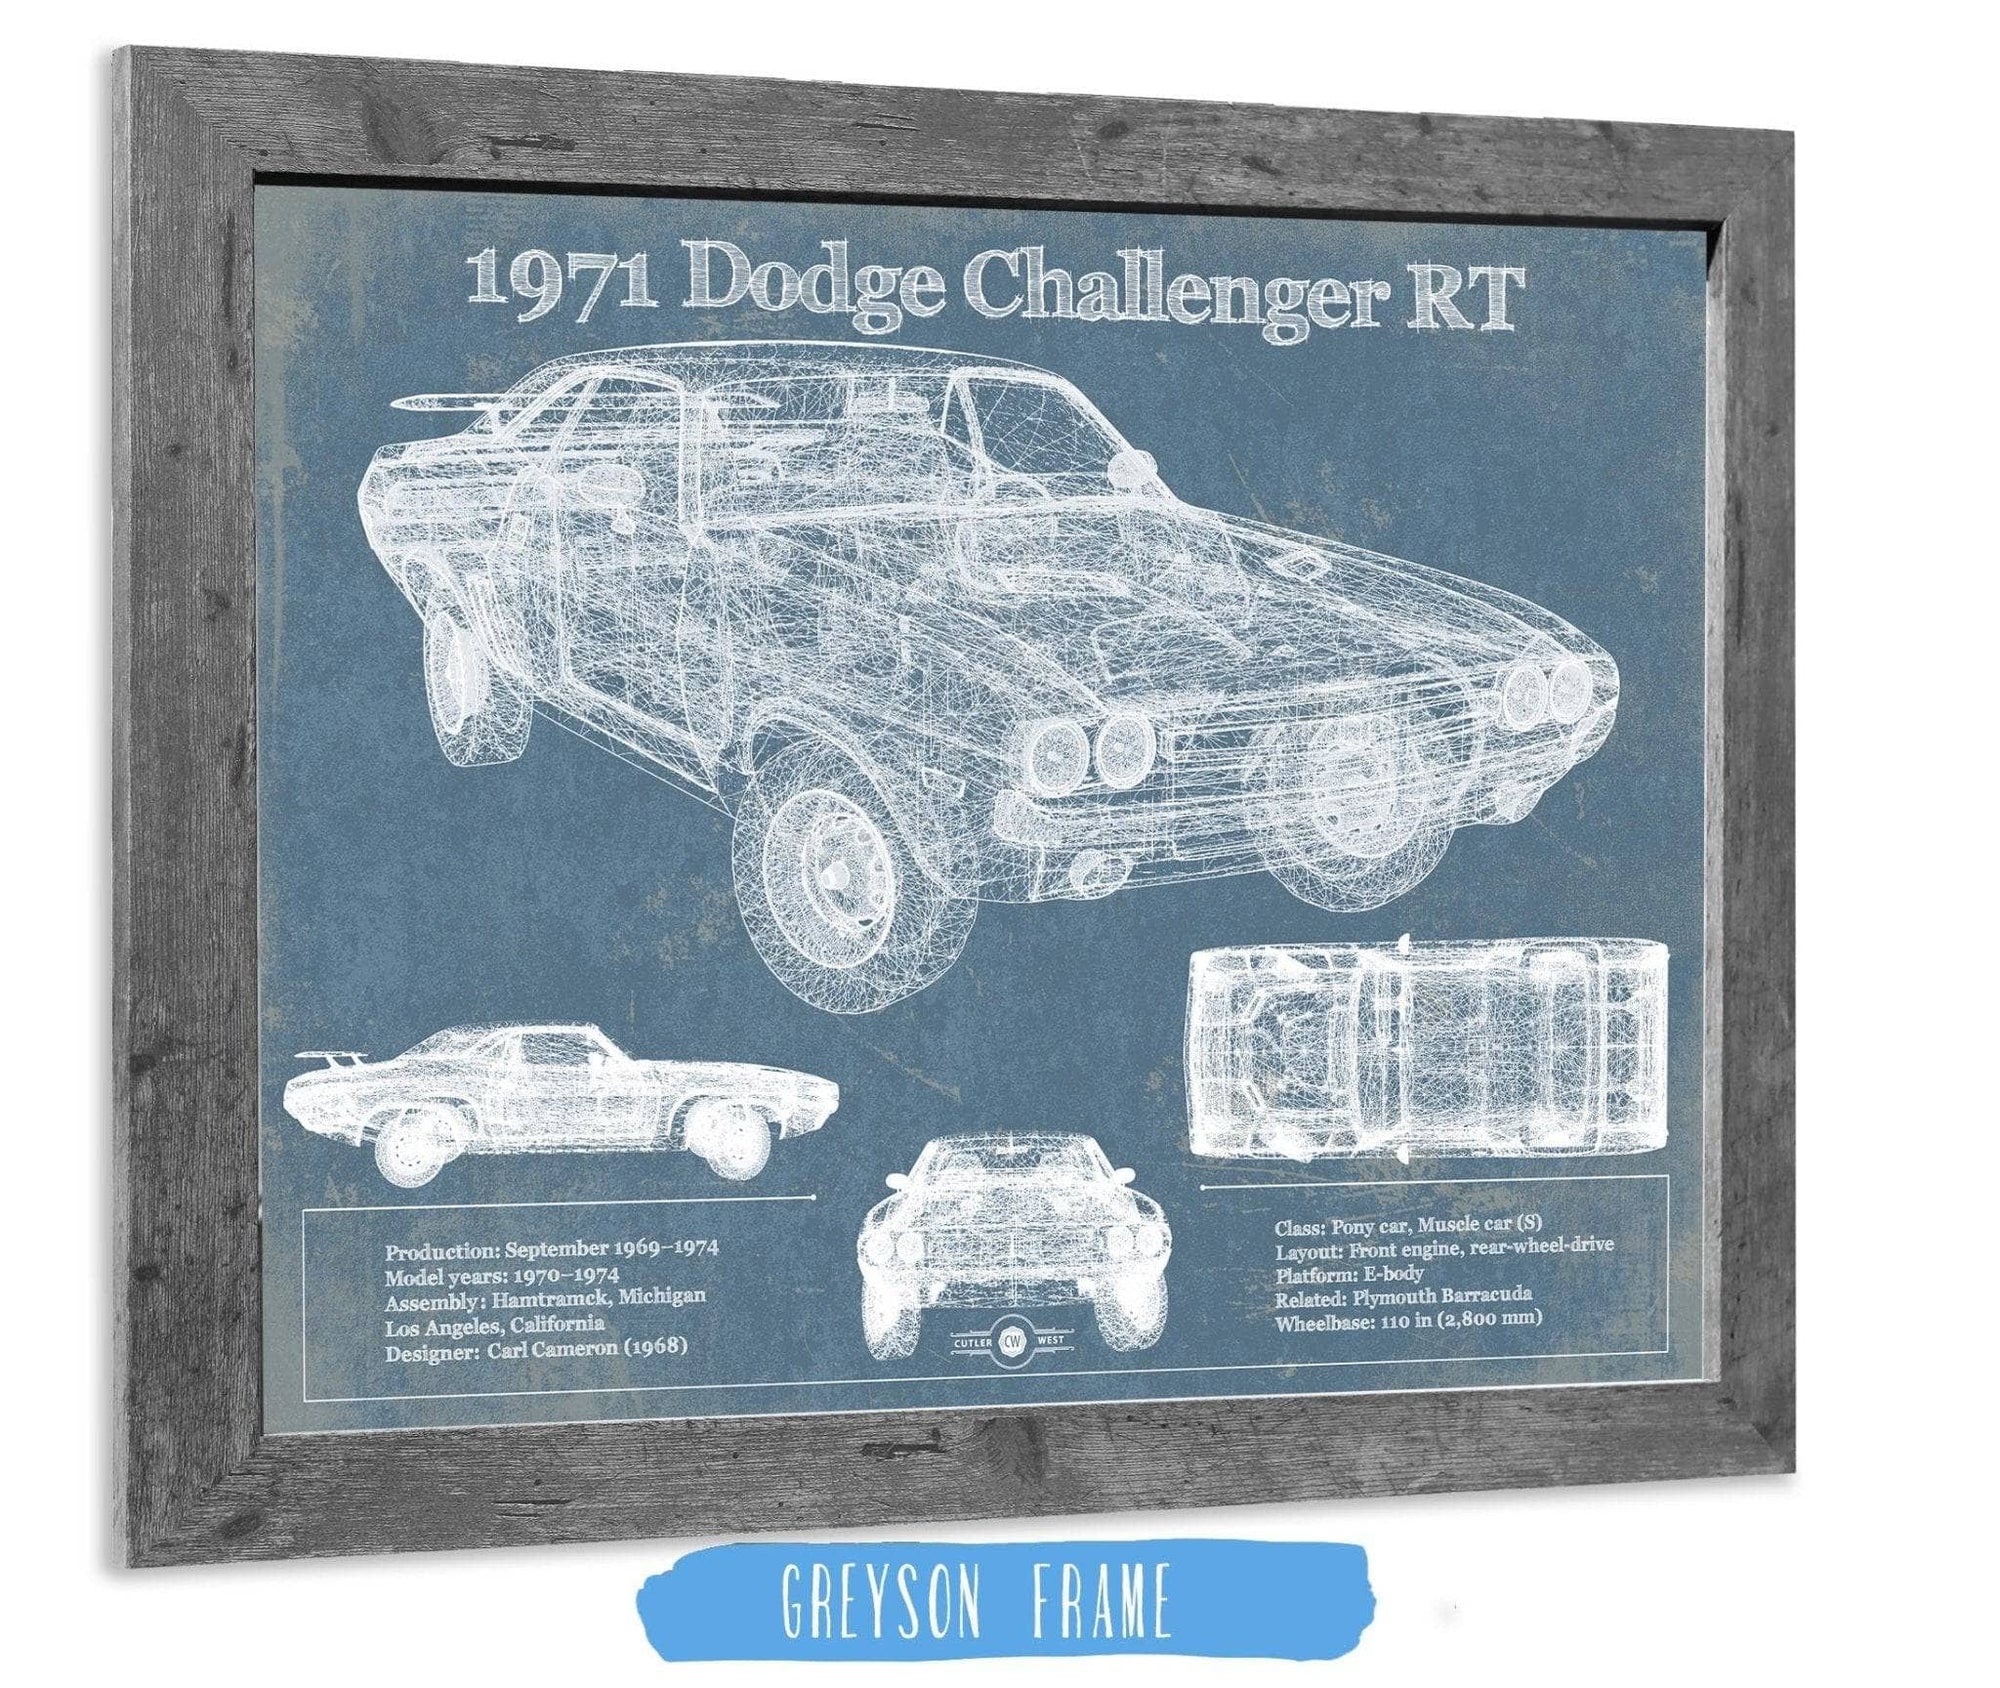 Cutler West Dodge Collection 14" x 11" / Greyson Frame 1971 Dodge Challenger Rt Car Blueprint Patent Original Art 933311096_19589